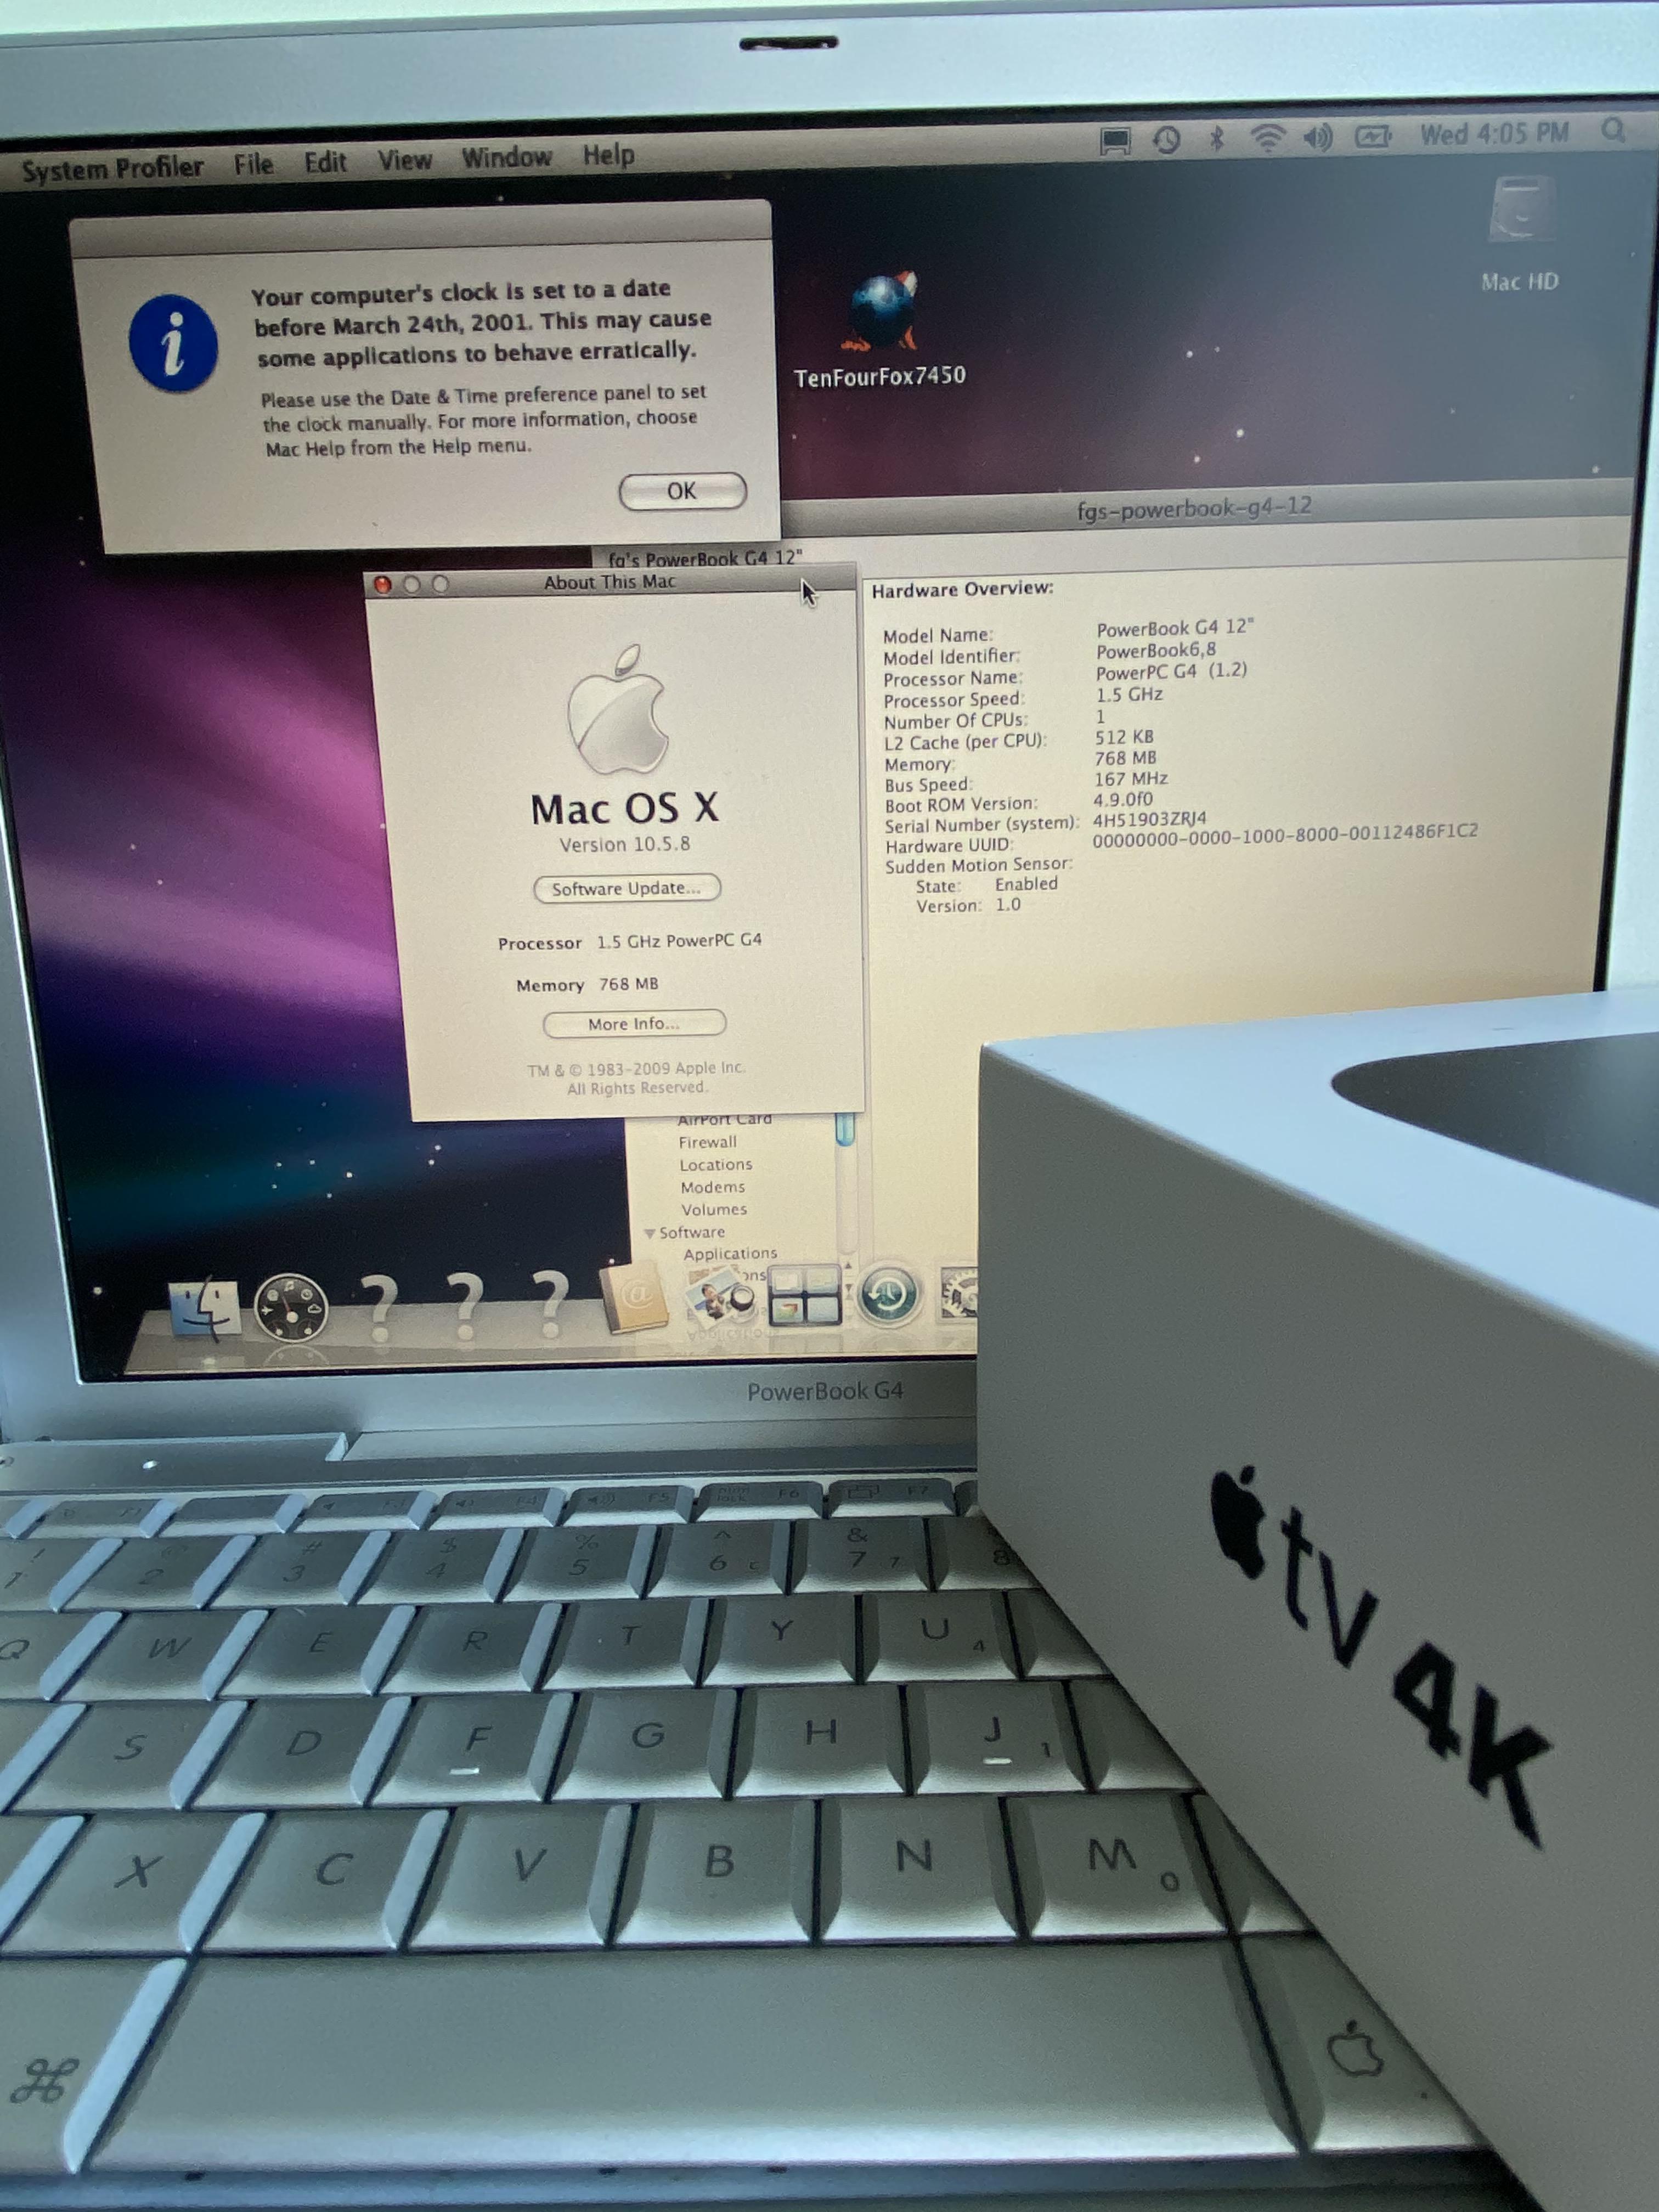 antivirus software for mac os x 10.5.8